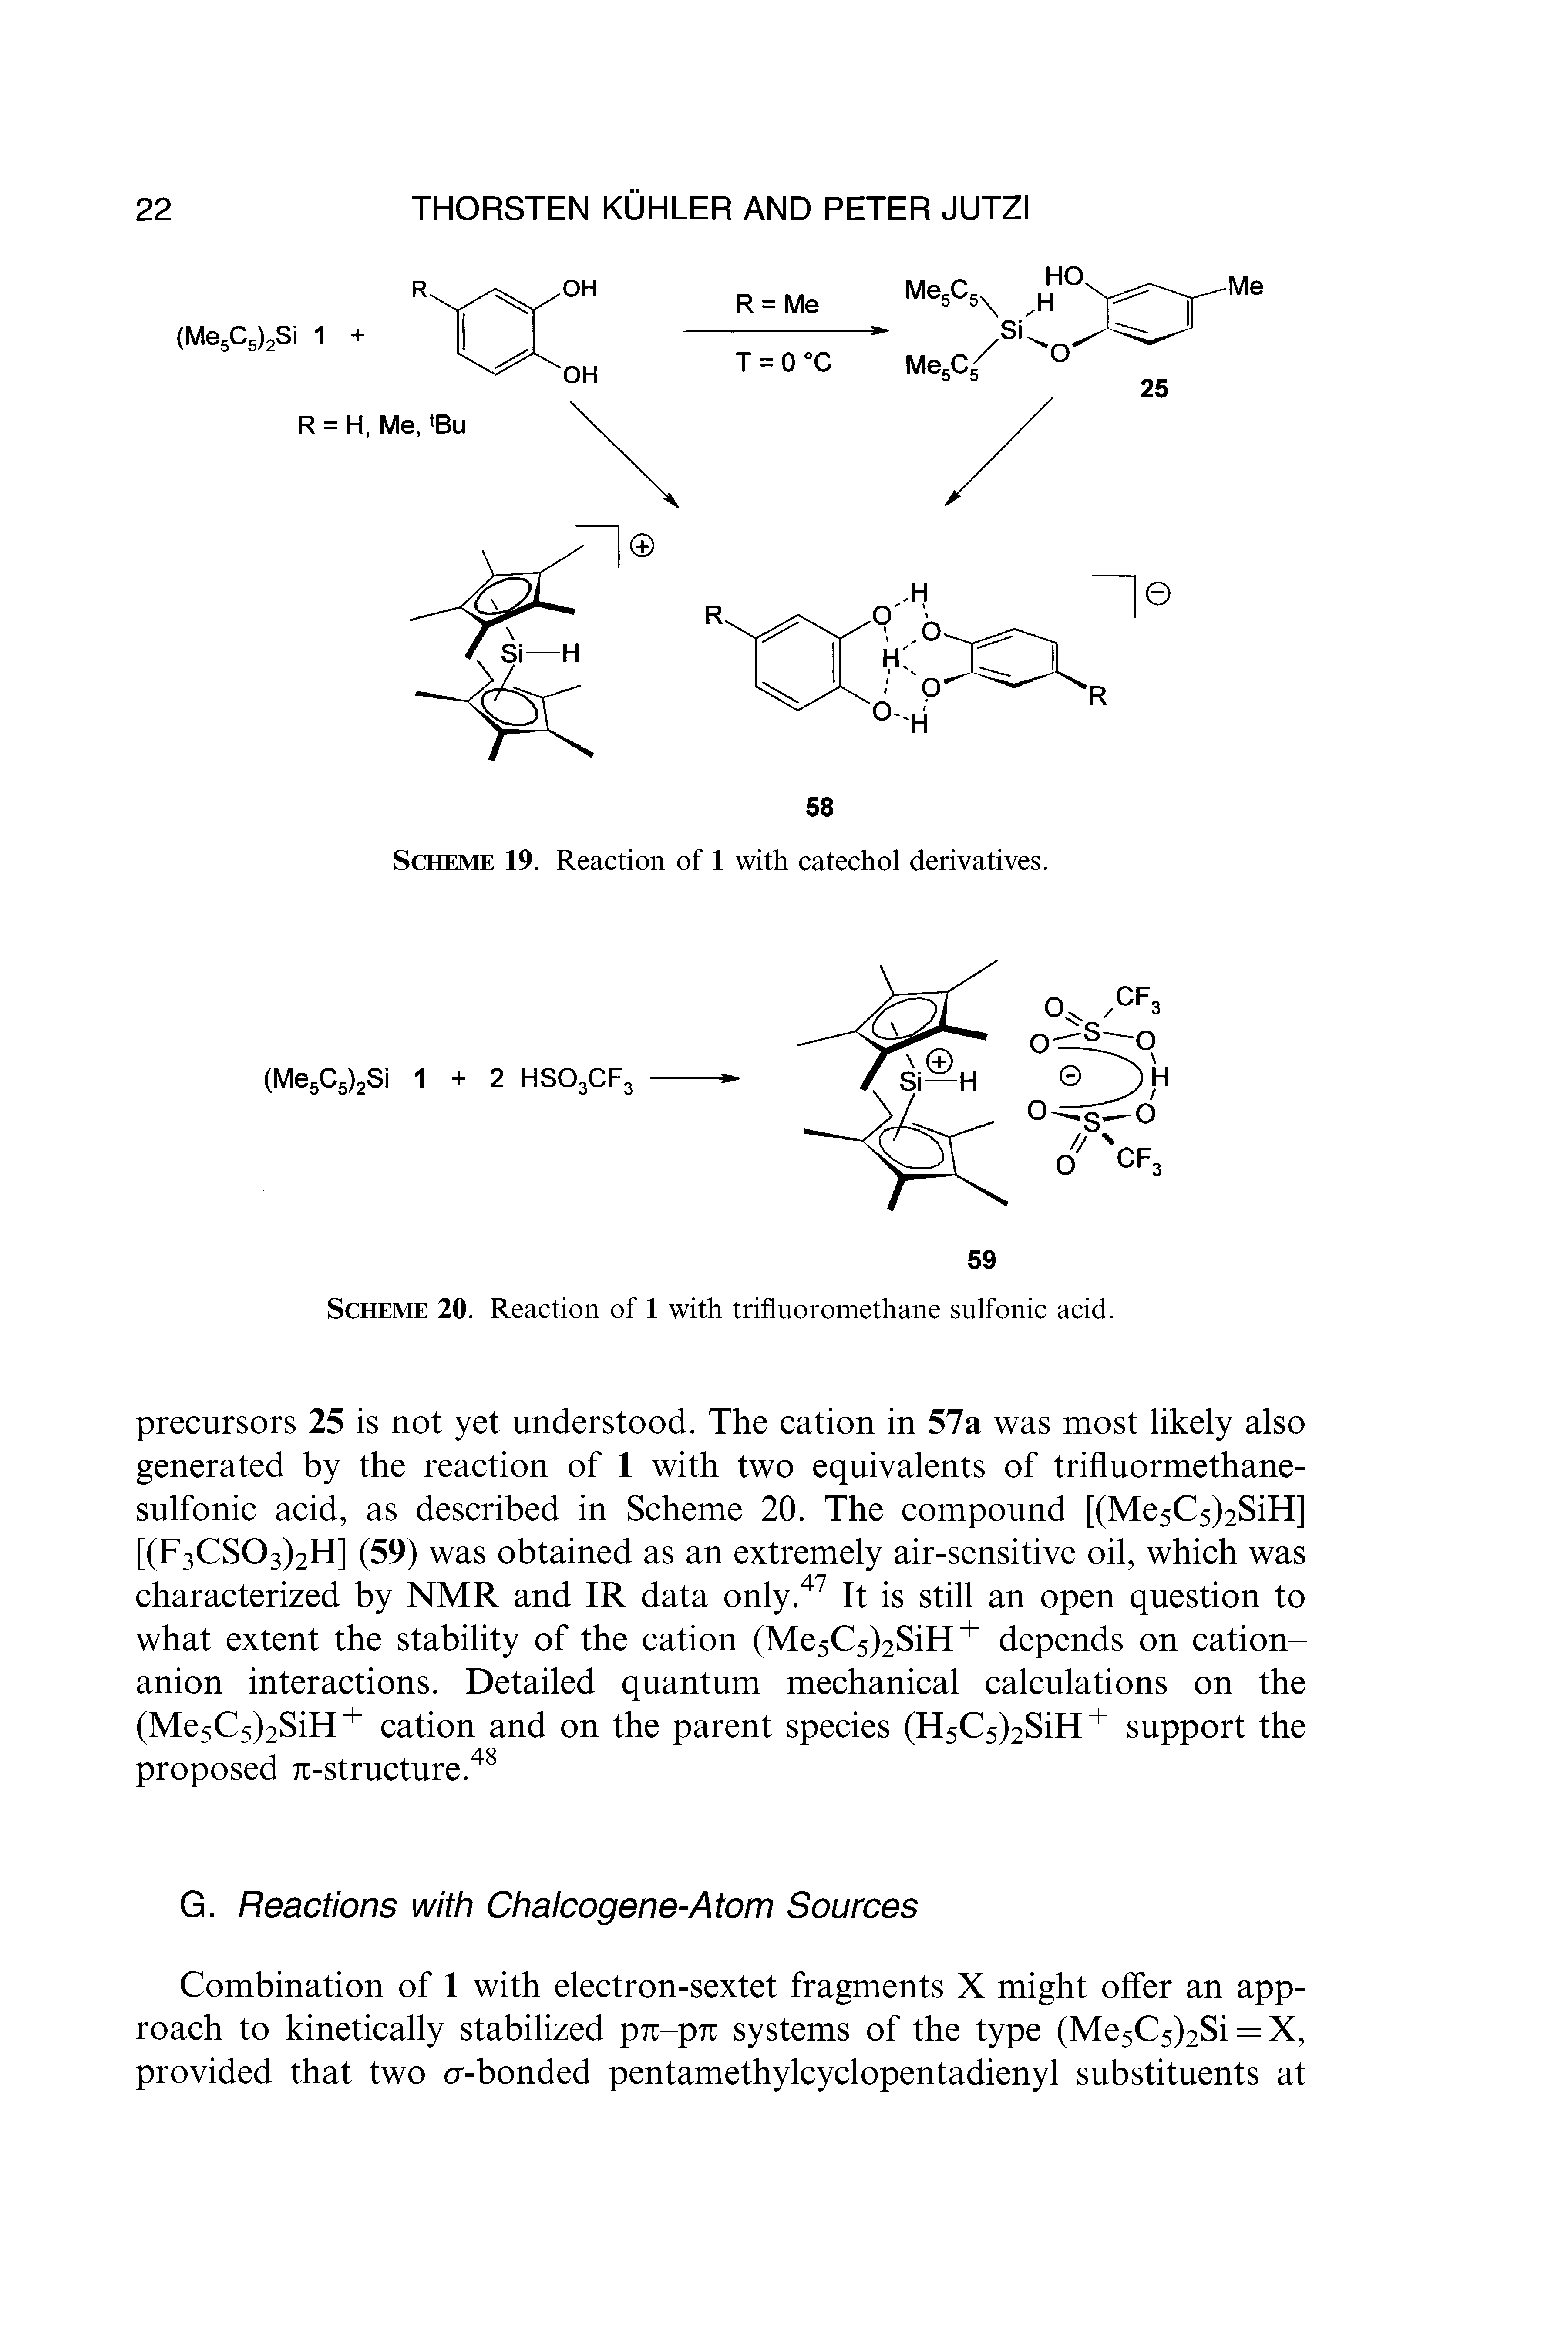 Scheme 20. Reaction of 1 with trifluoromethane sulfonic acid.